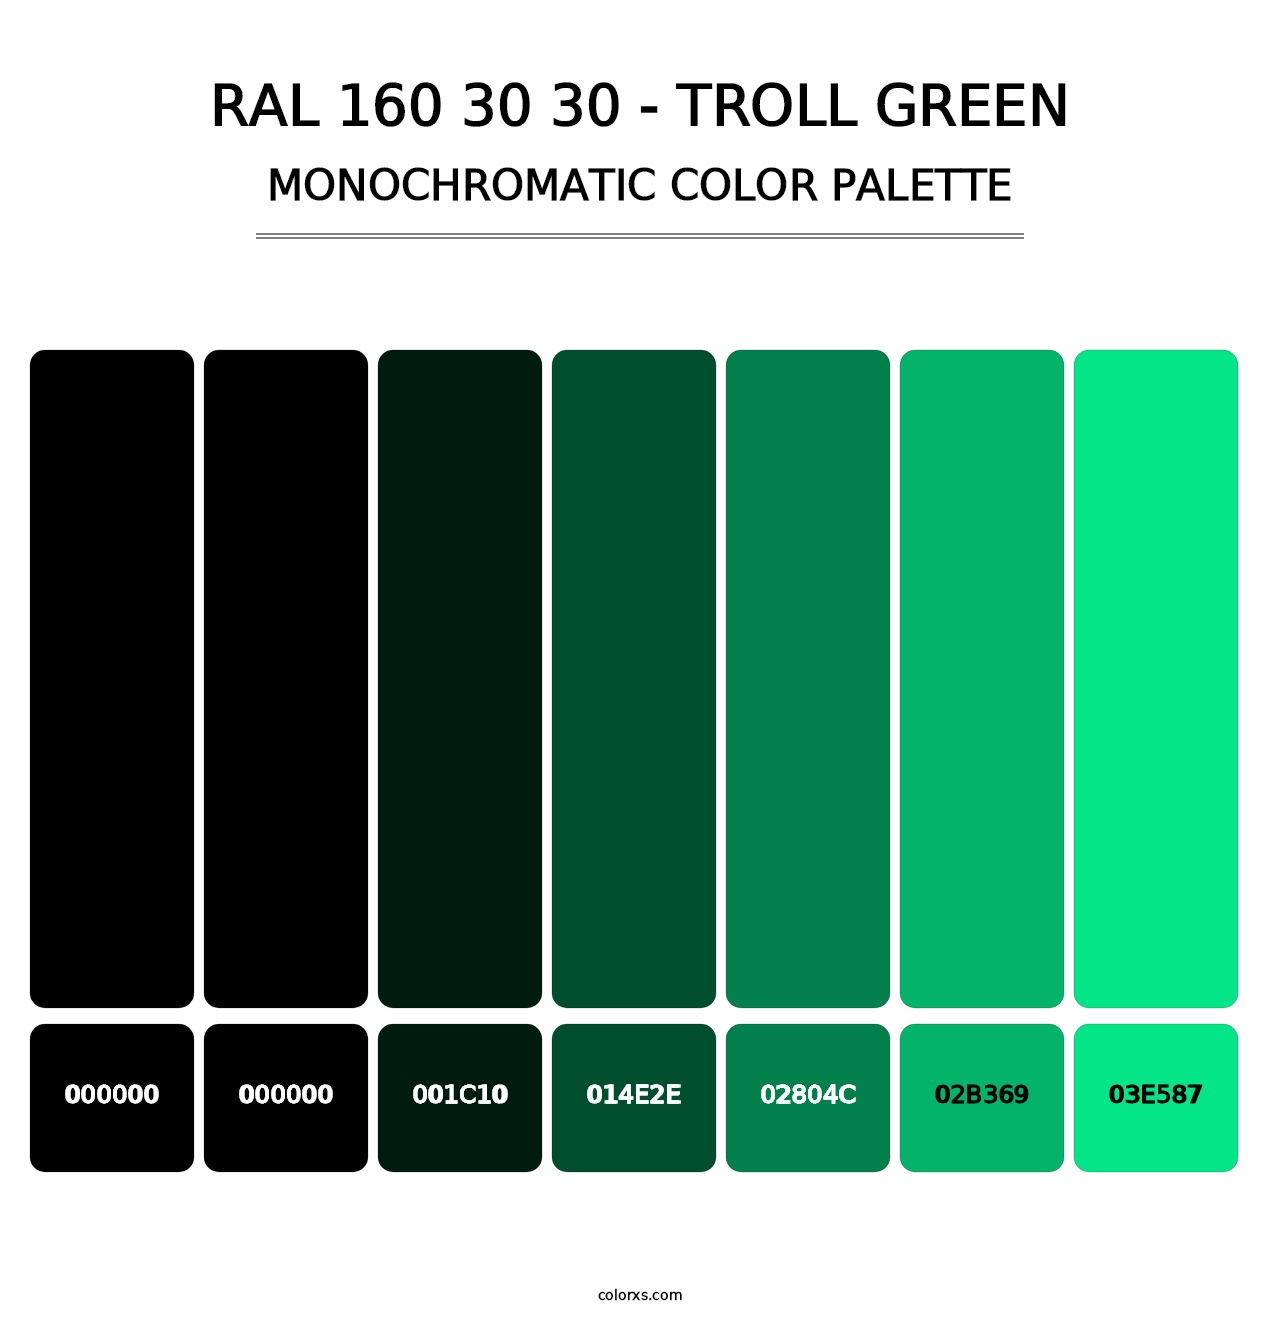 RAL 160 30 30 - Troll Green - Monochromatic Color Palette